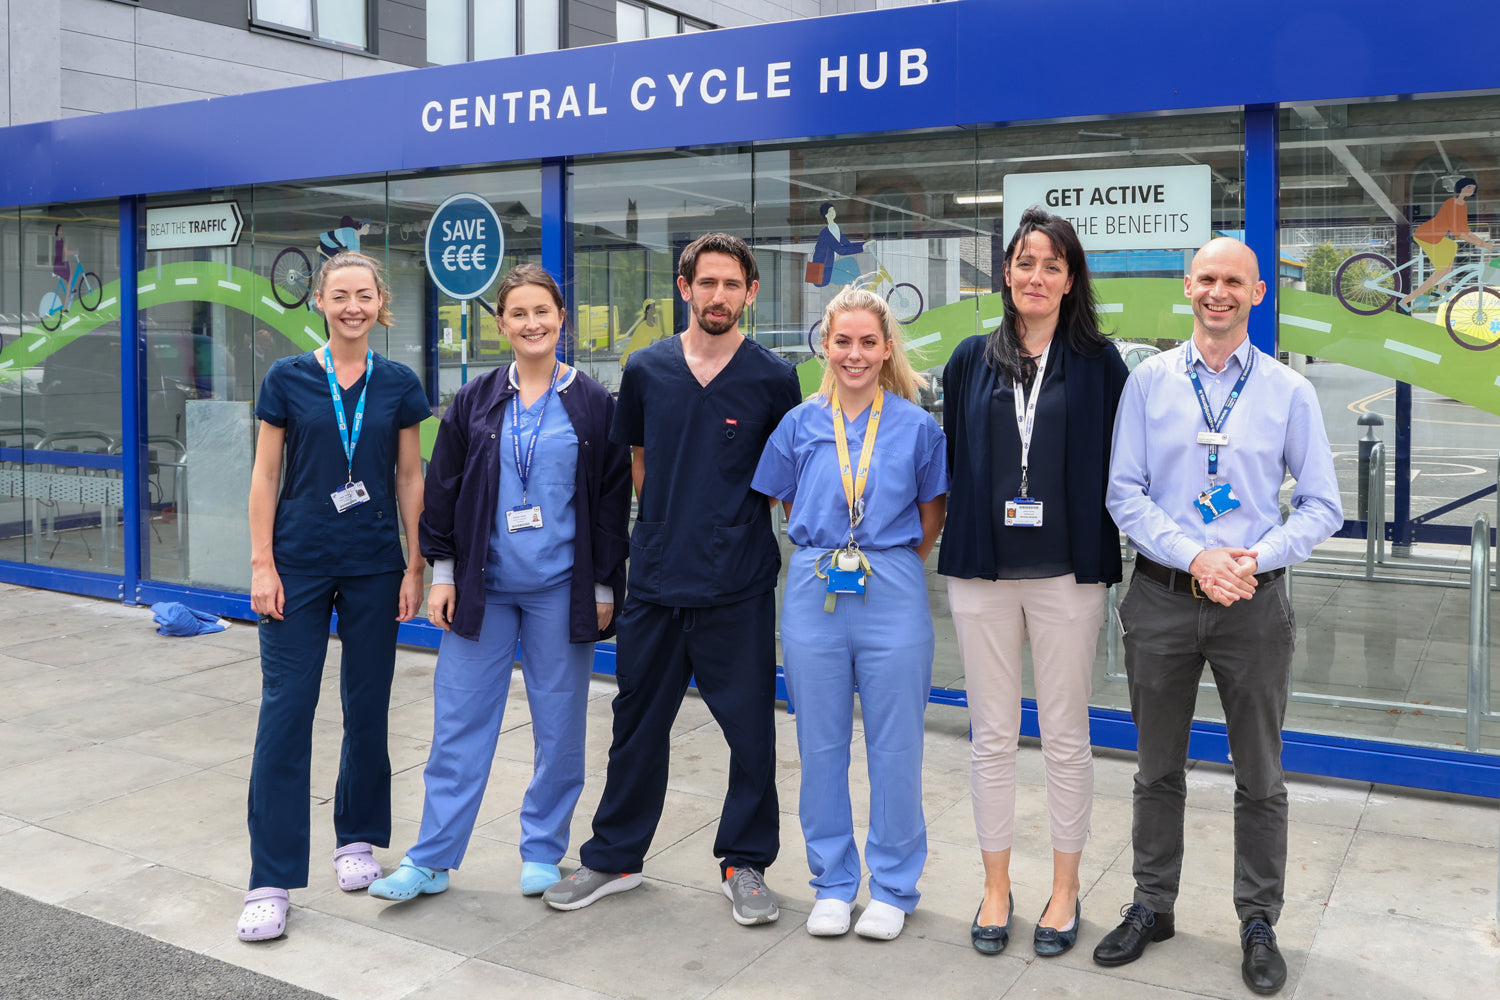 St James's Hospital Cycle Hub